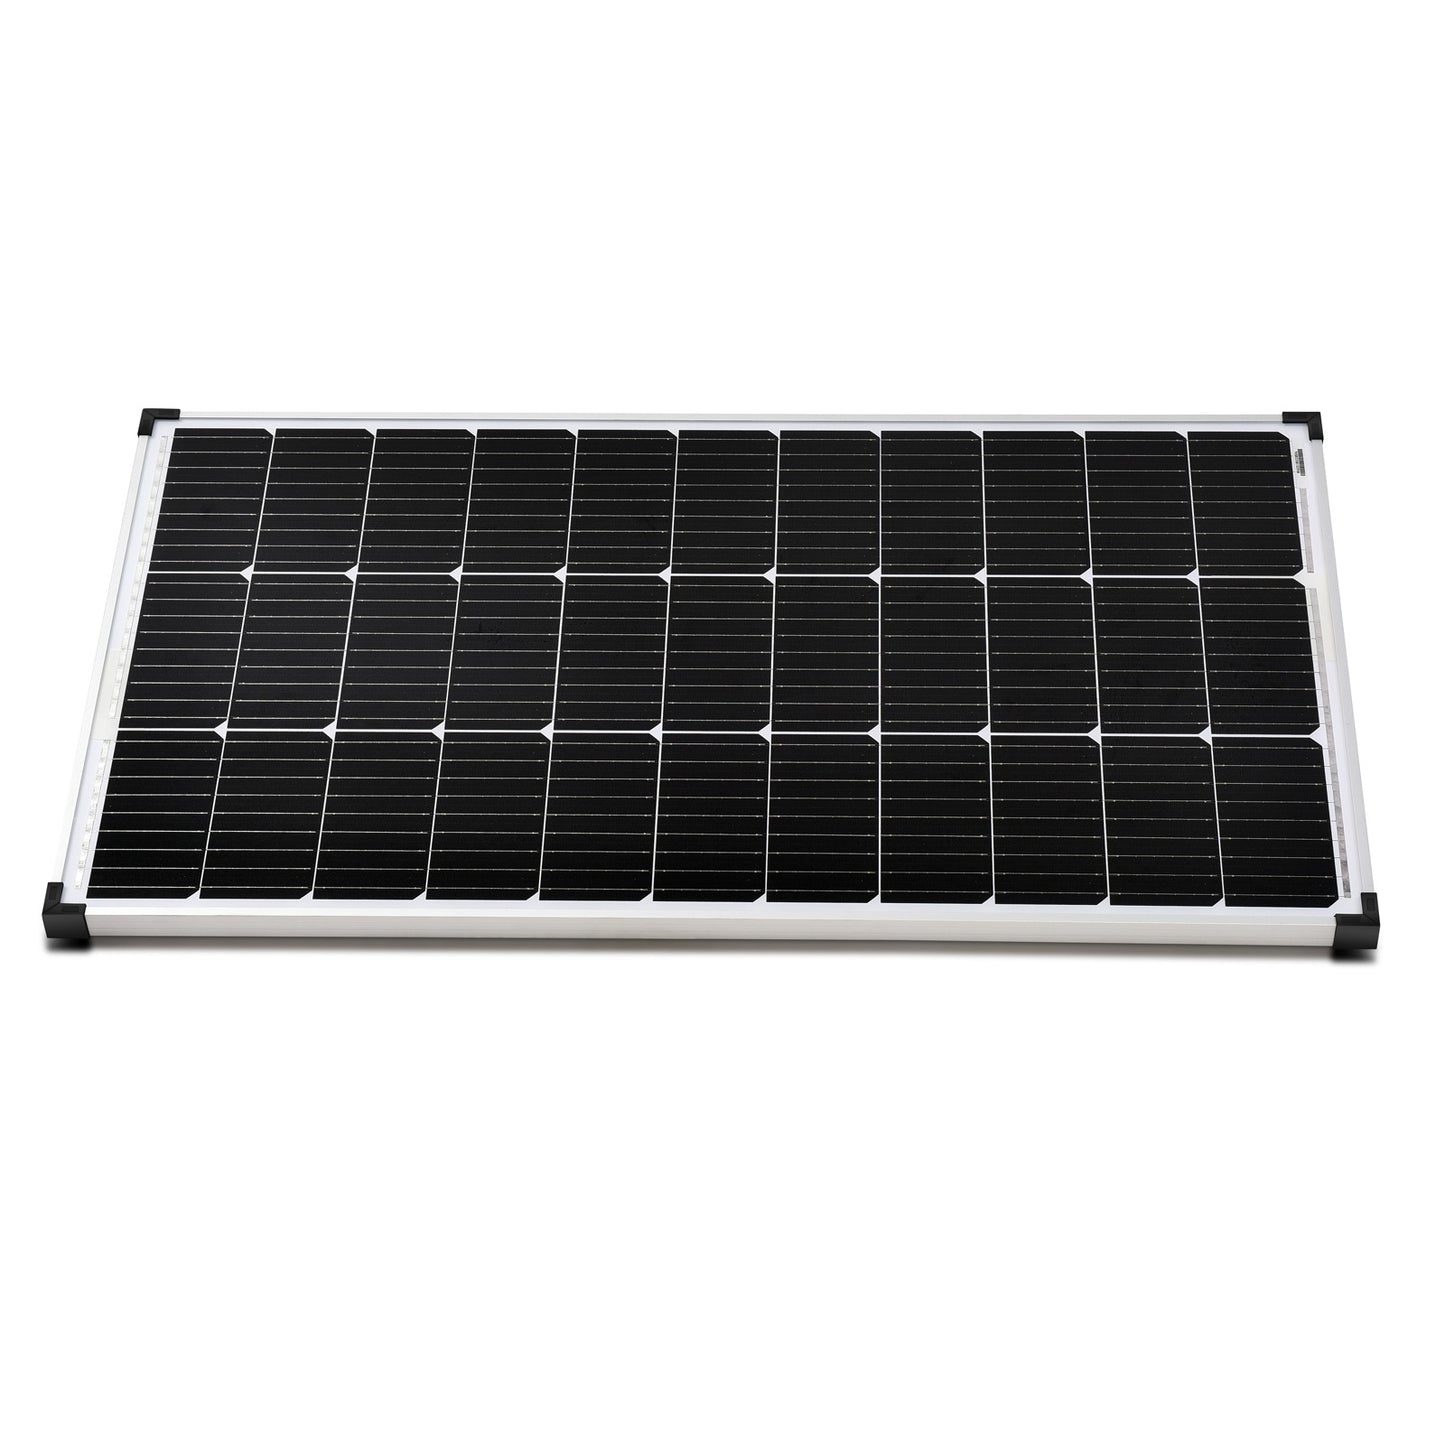 BUNDLE DEAL - VoltX 12V 100Ah Lithium Battery + VoltX 12V 100W Solar Panel Mono Fixed